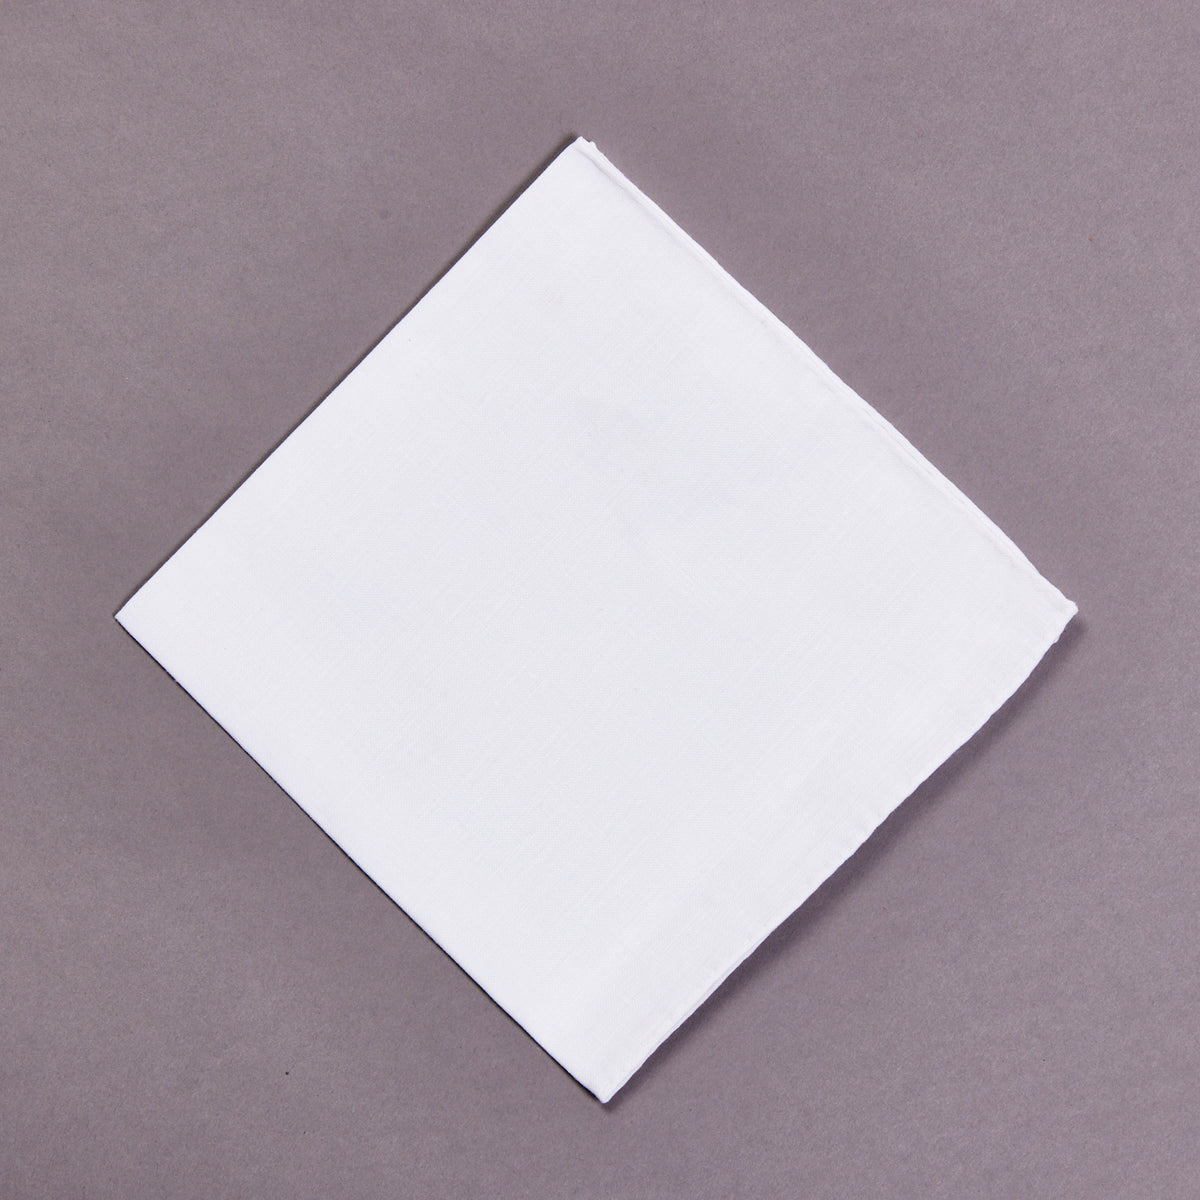 A Simonnot Godard 100% Linen Plain White Pocket Square on a gray surface.